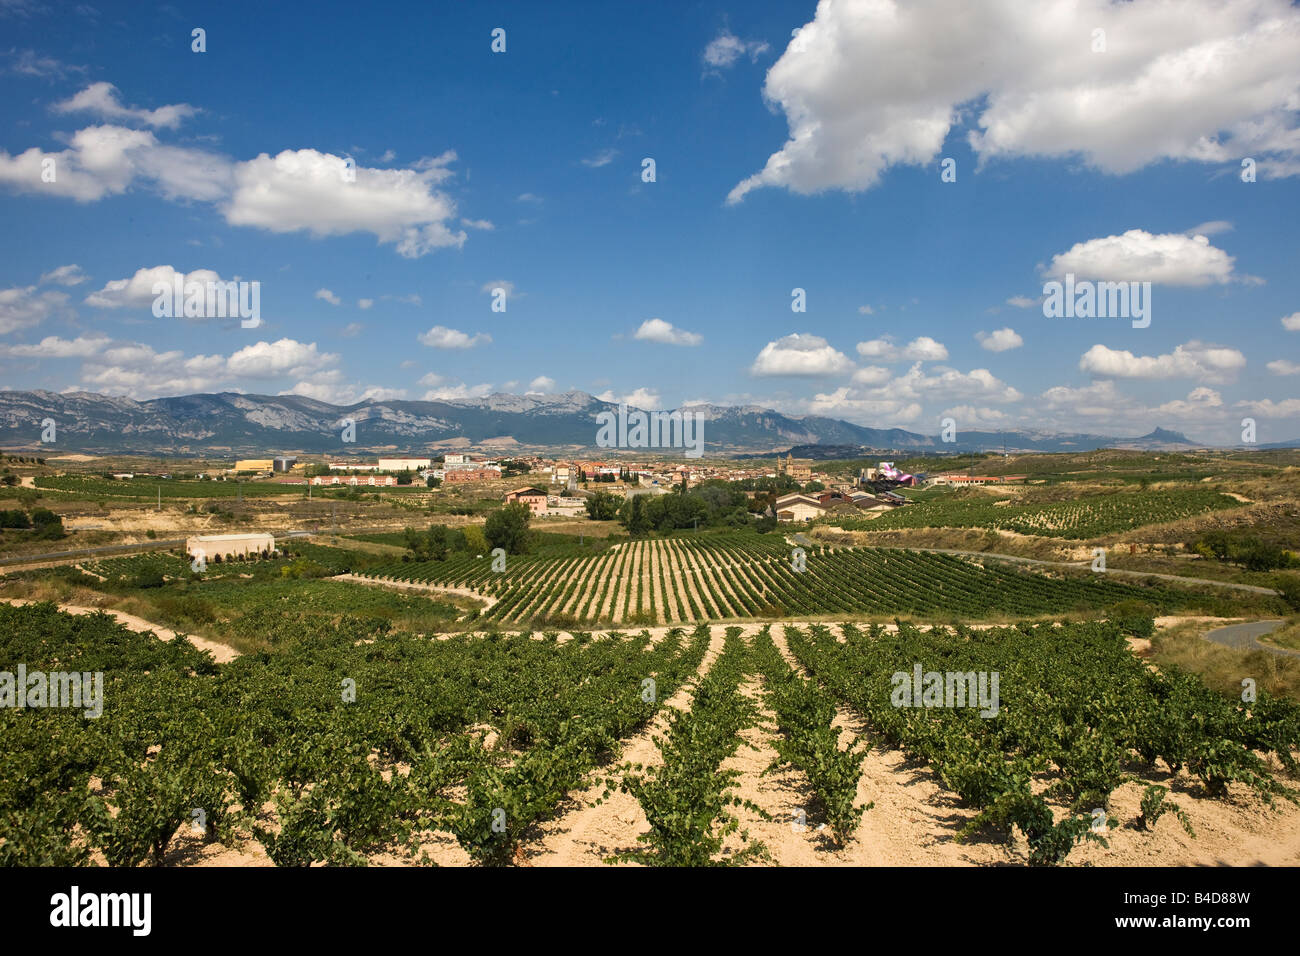 The vineyards around the town of El Ciego, in the Rioja Alavesa region of Spain Stock Photo